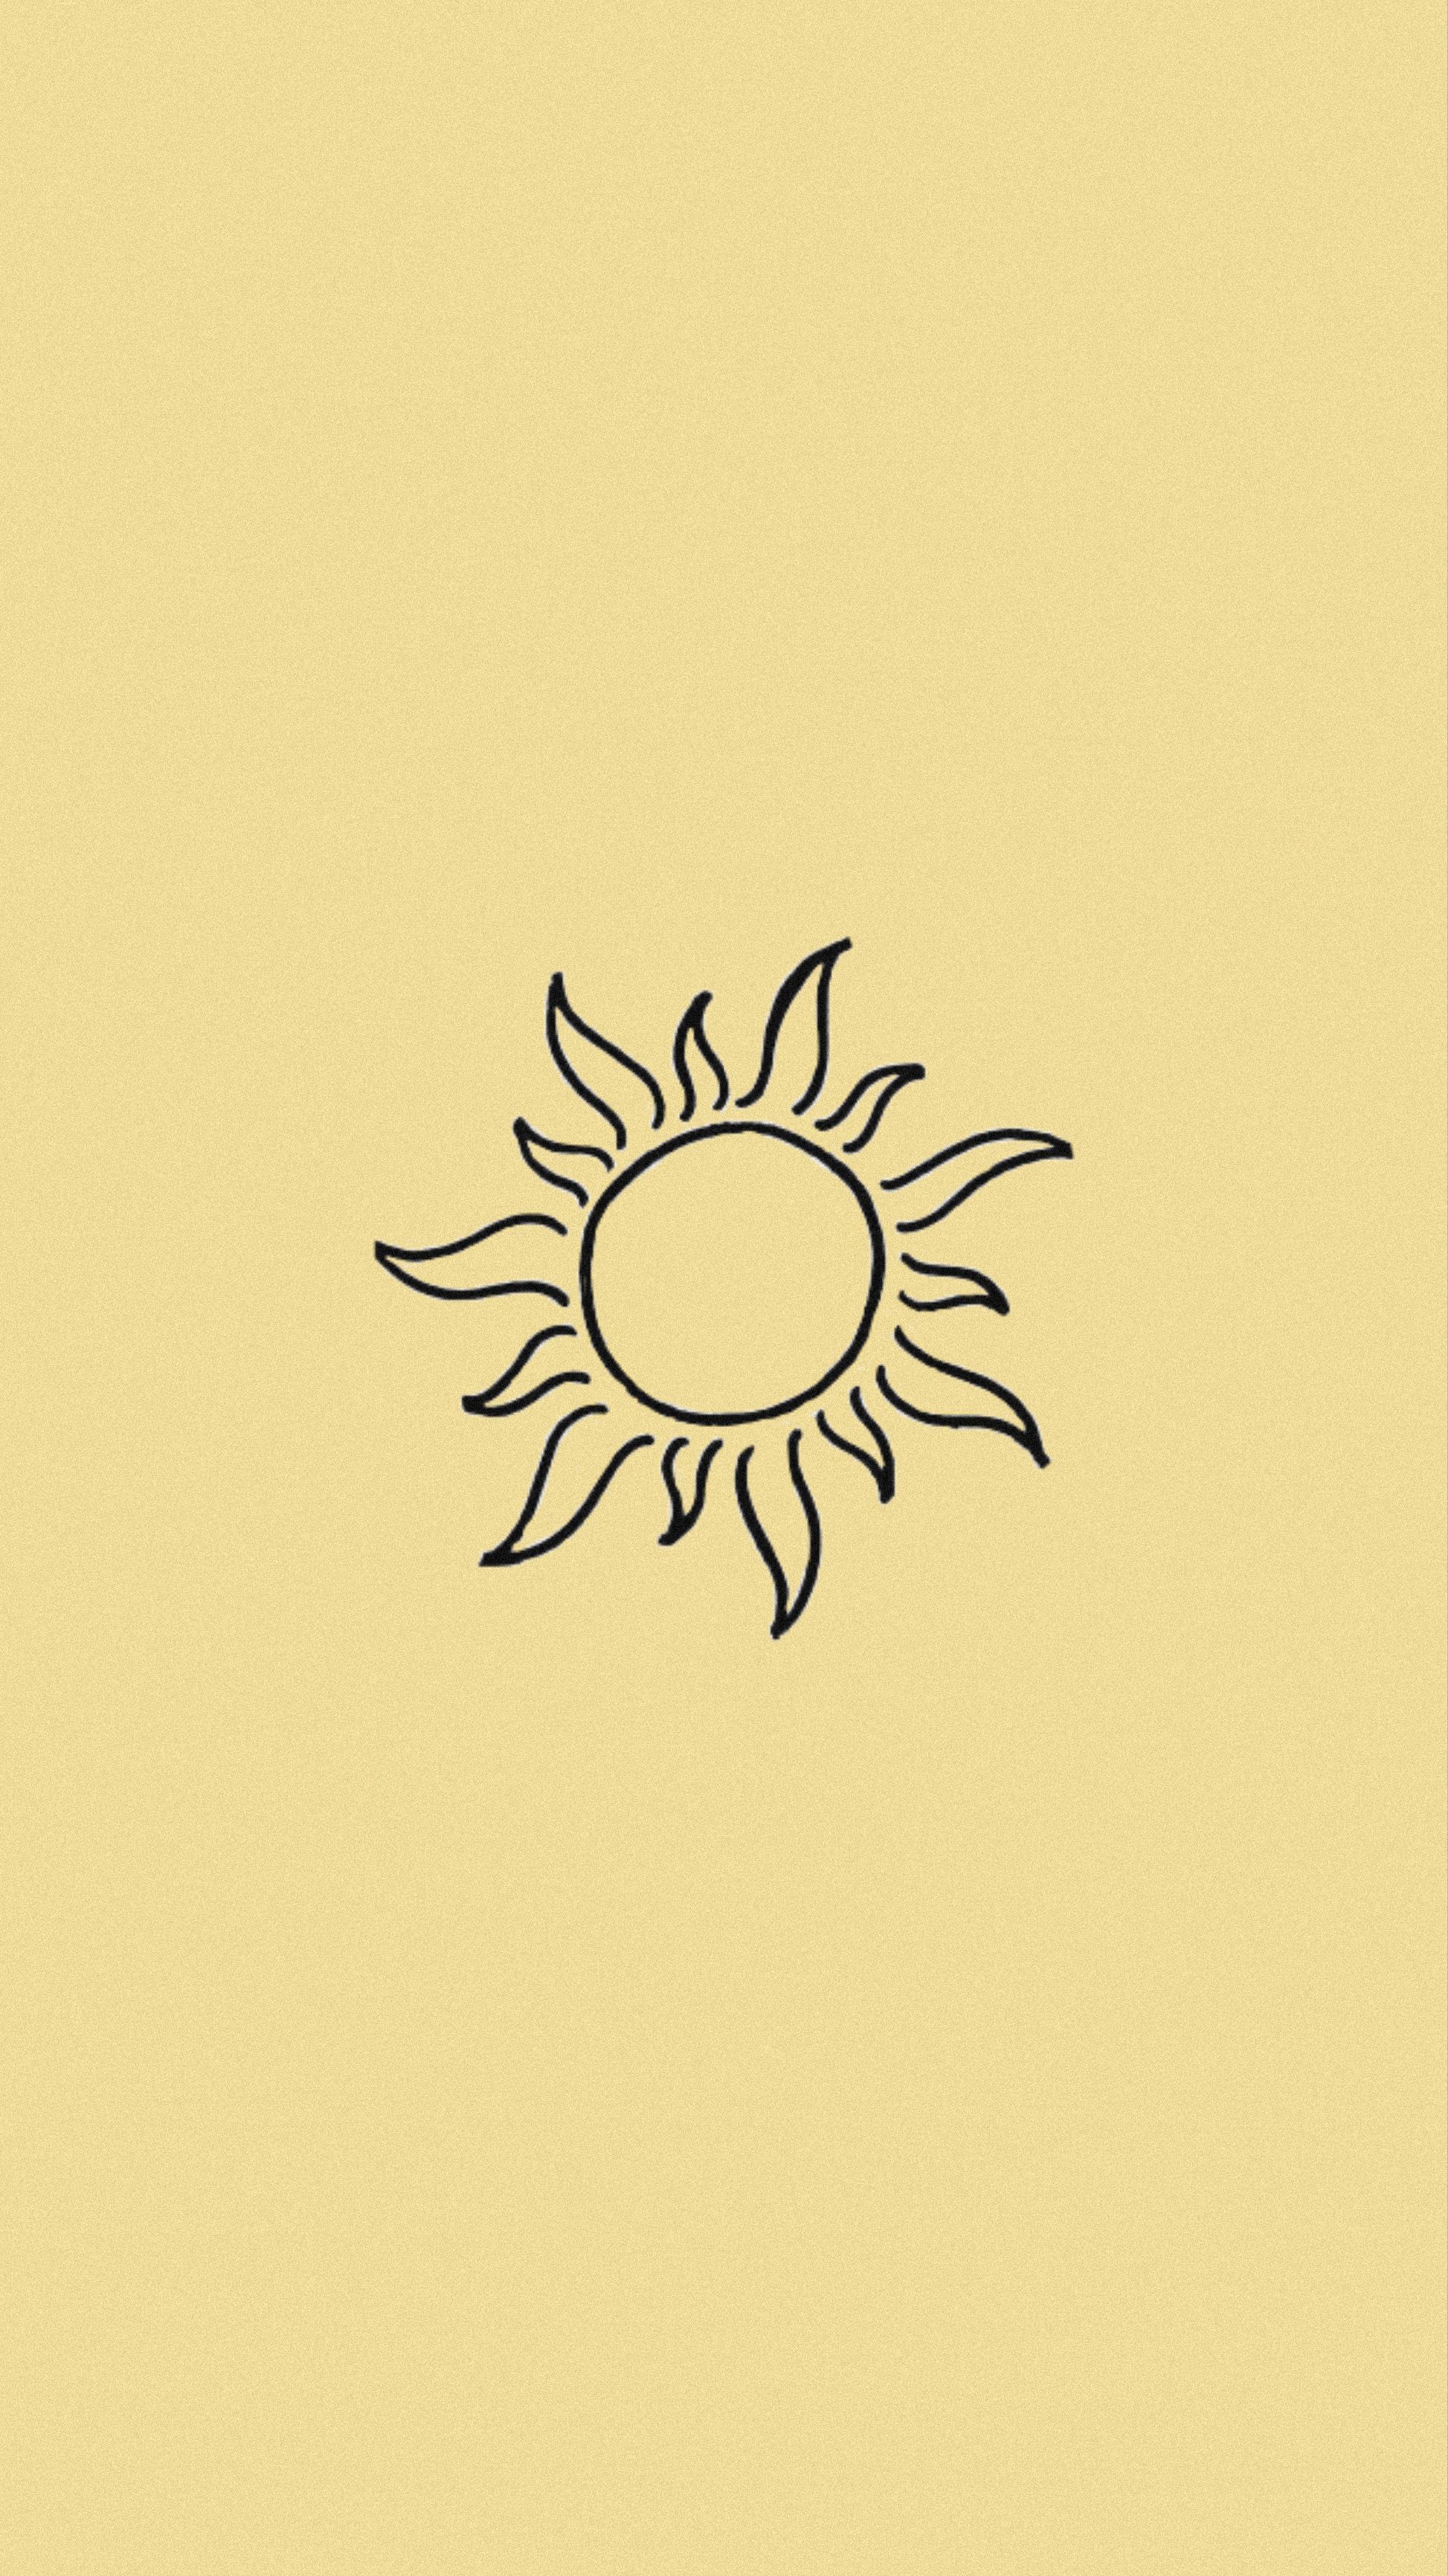 sun wallpaper. Soleil dessin, Fond d'ecran dessin, Petit tatouage